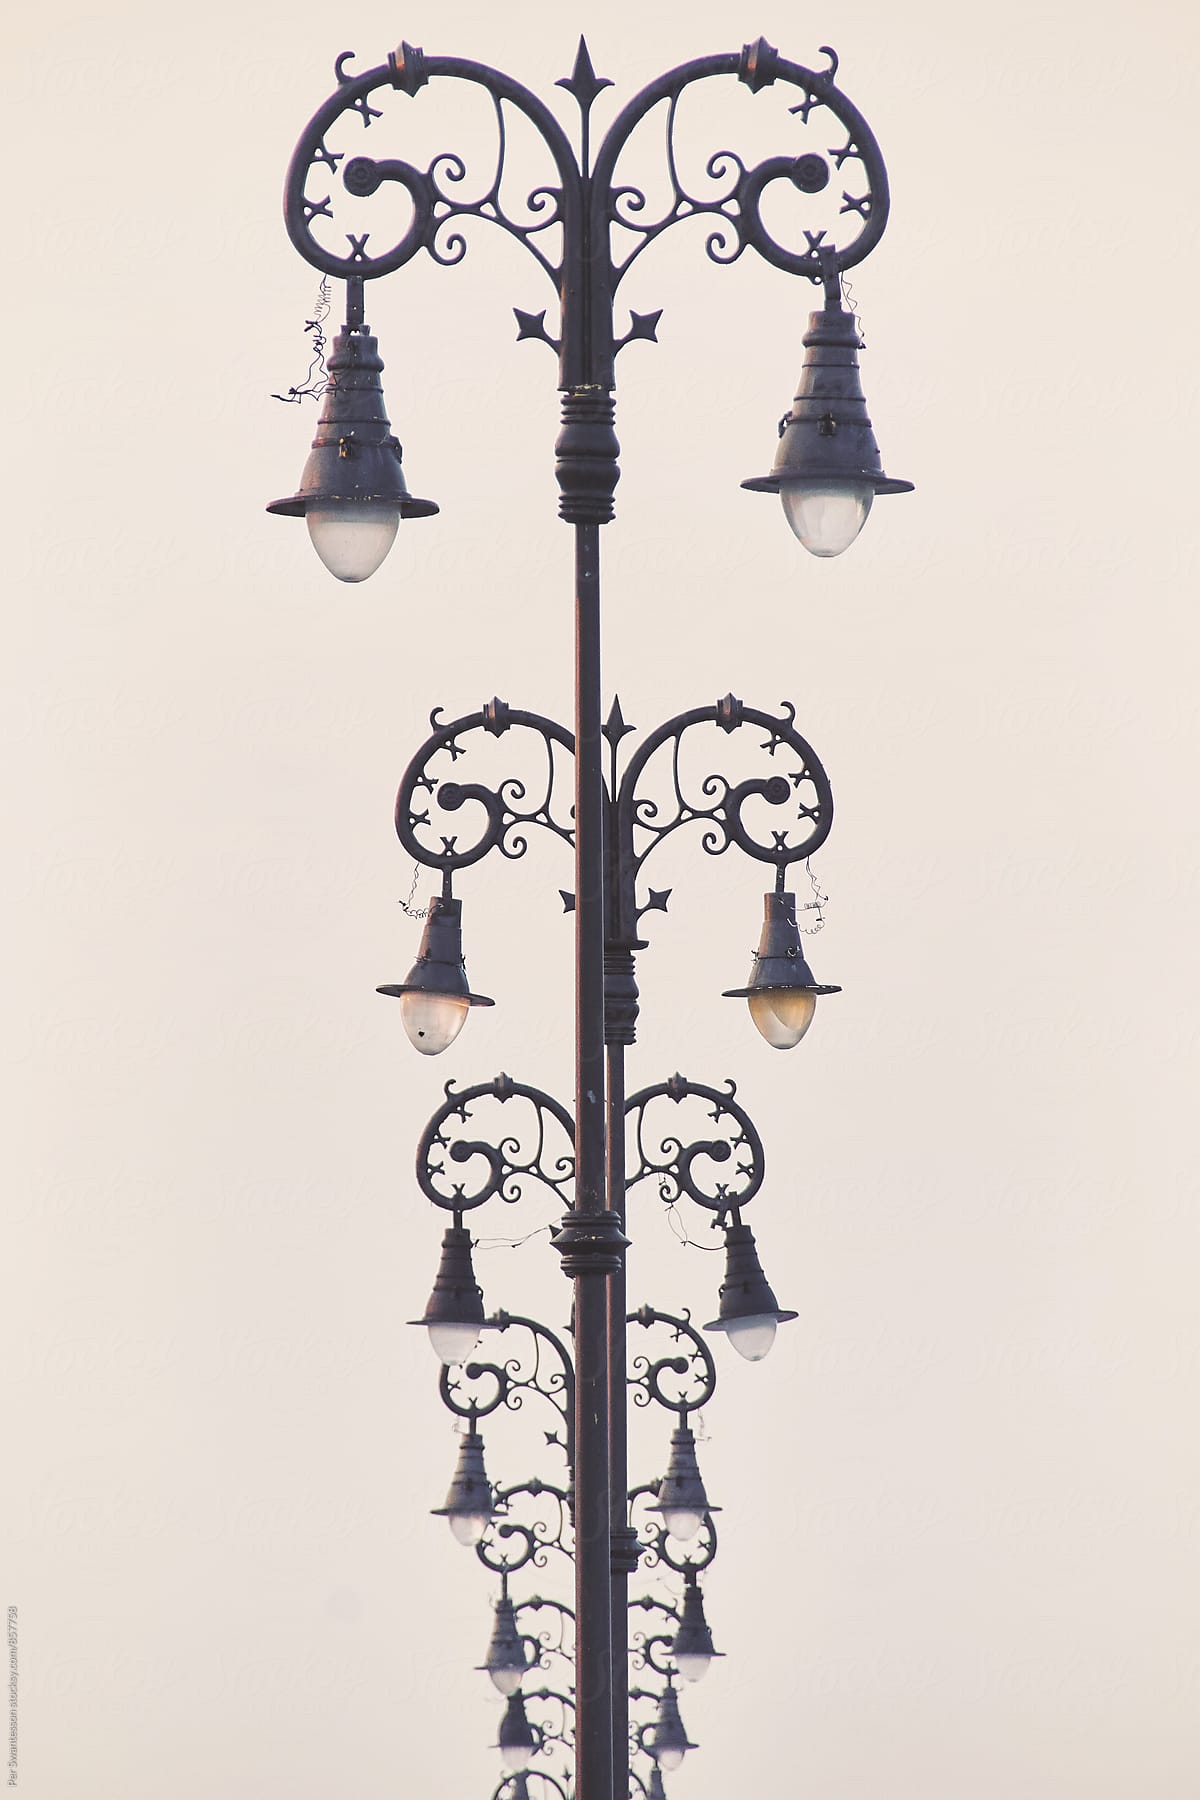 Old fashioned ornate lamp posts. Veracruz, Mexico